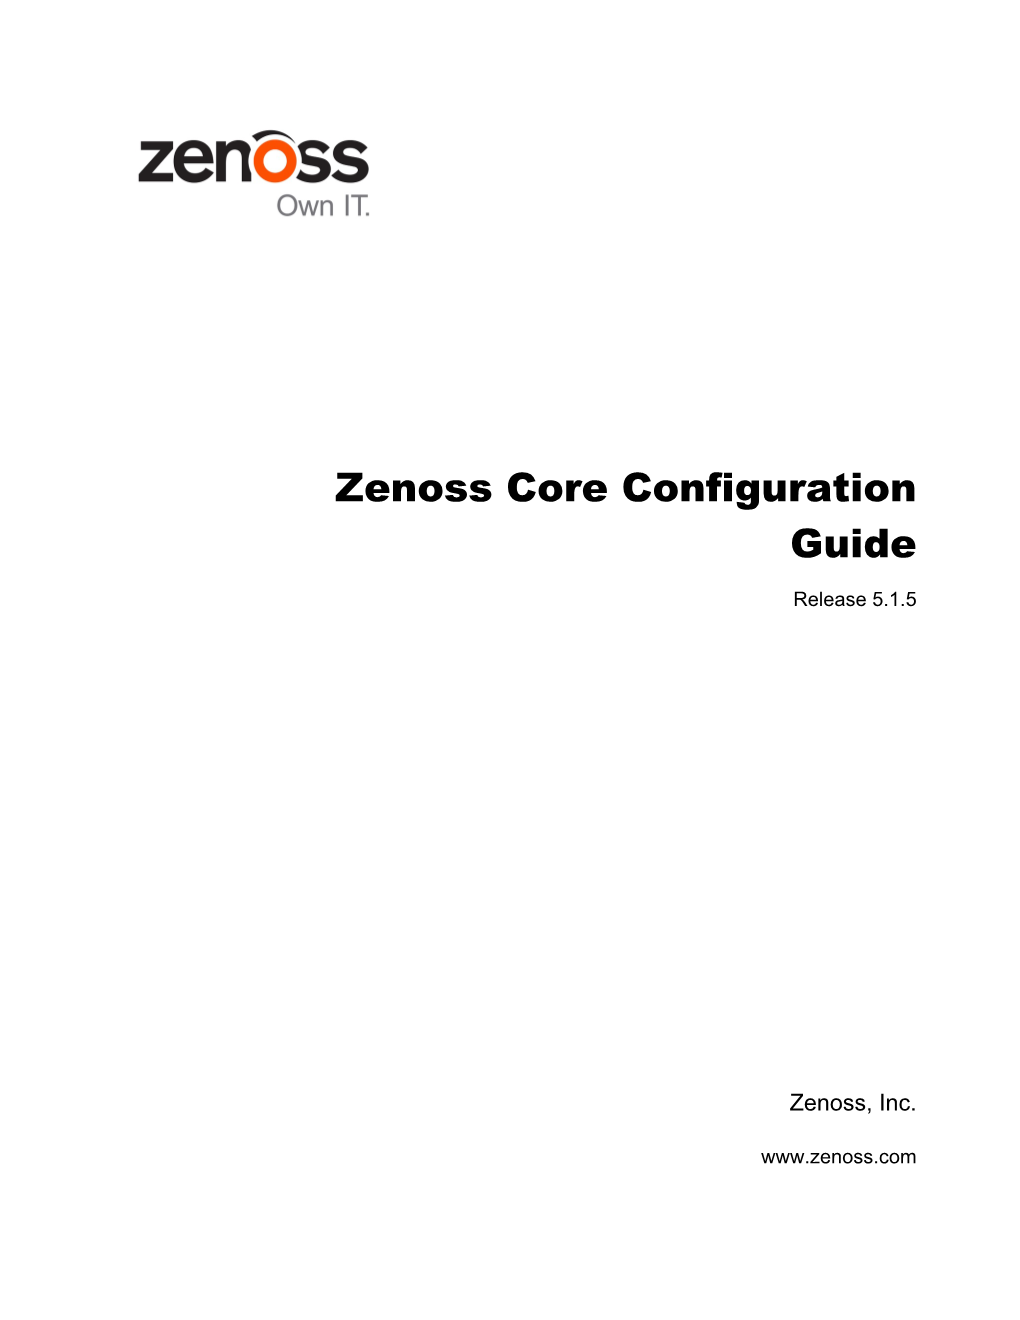 Zenoss Core Configuration Guide